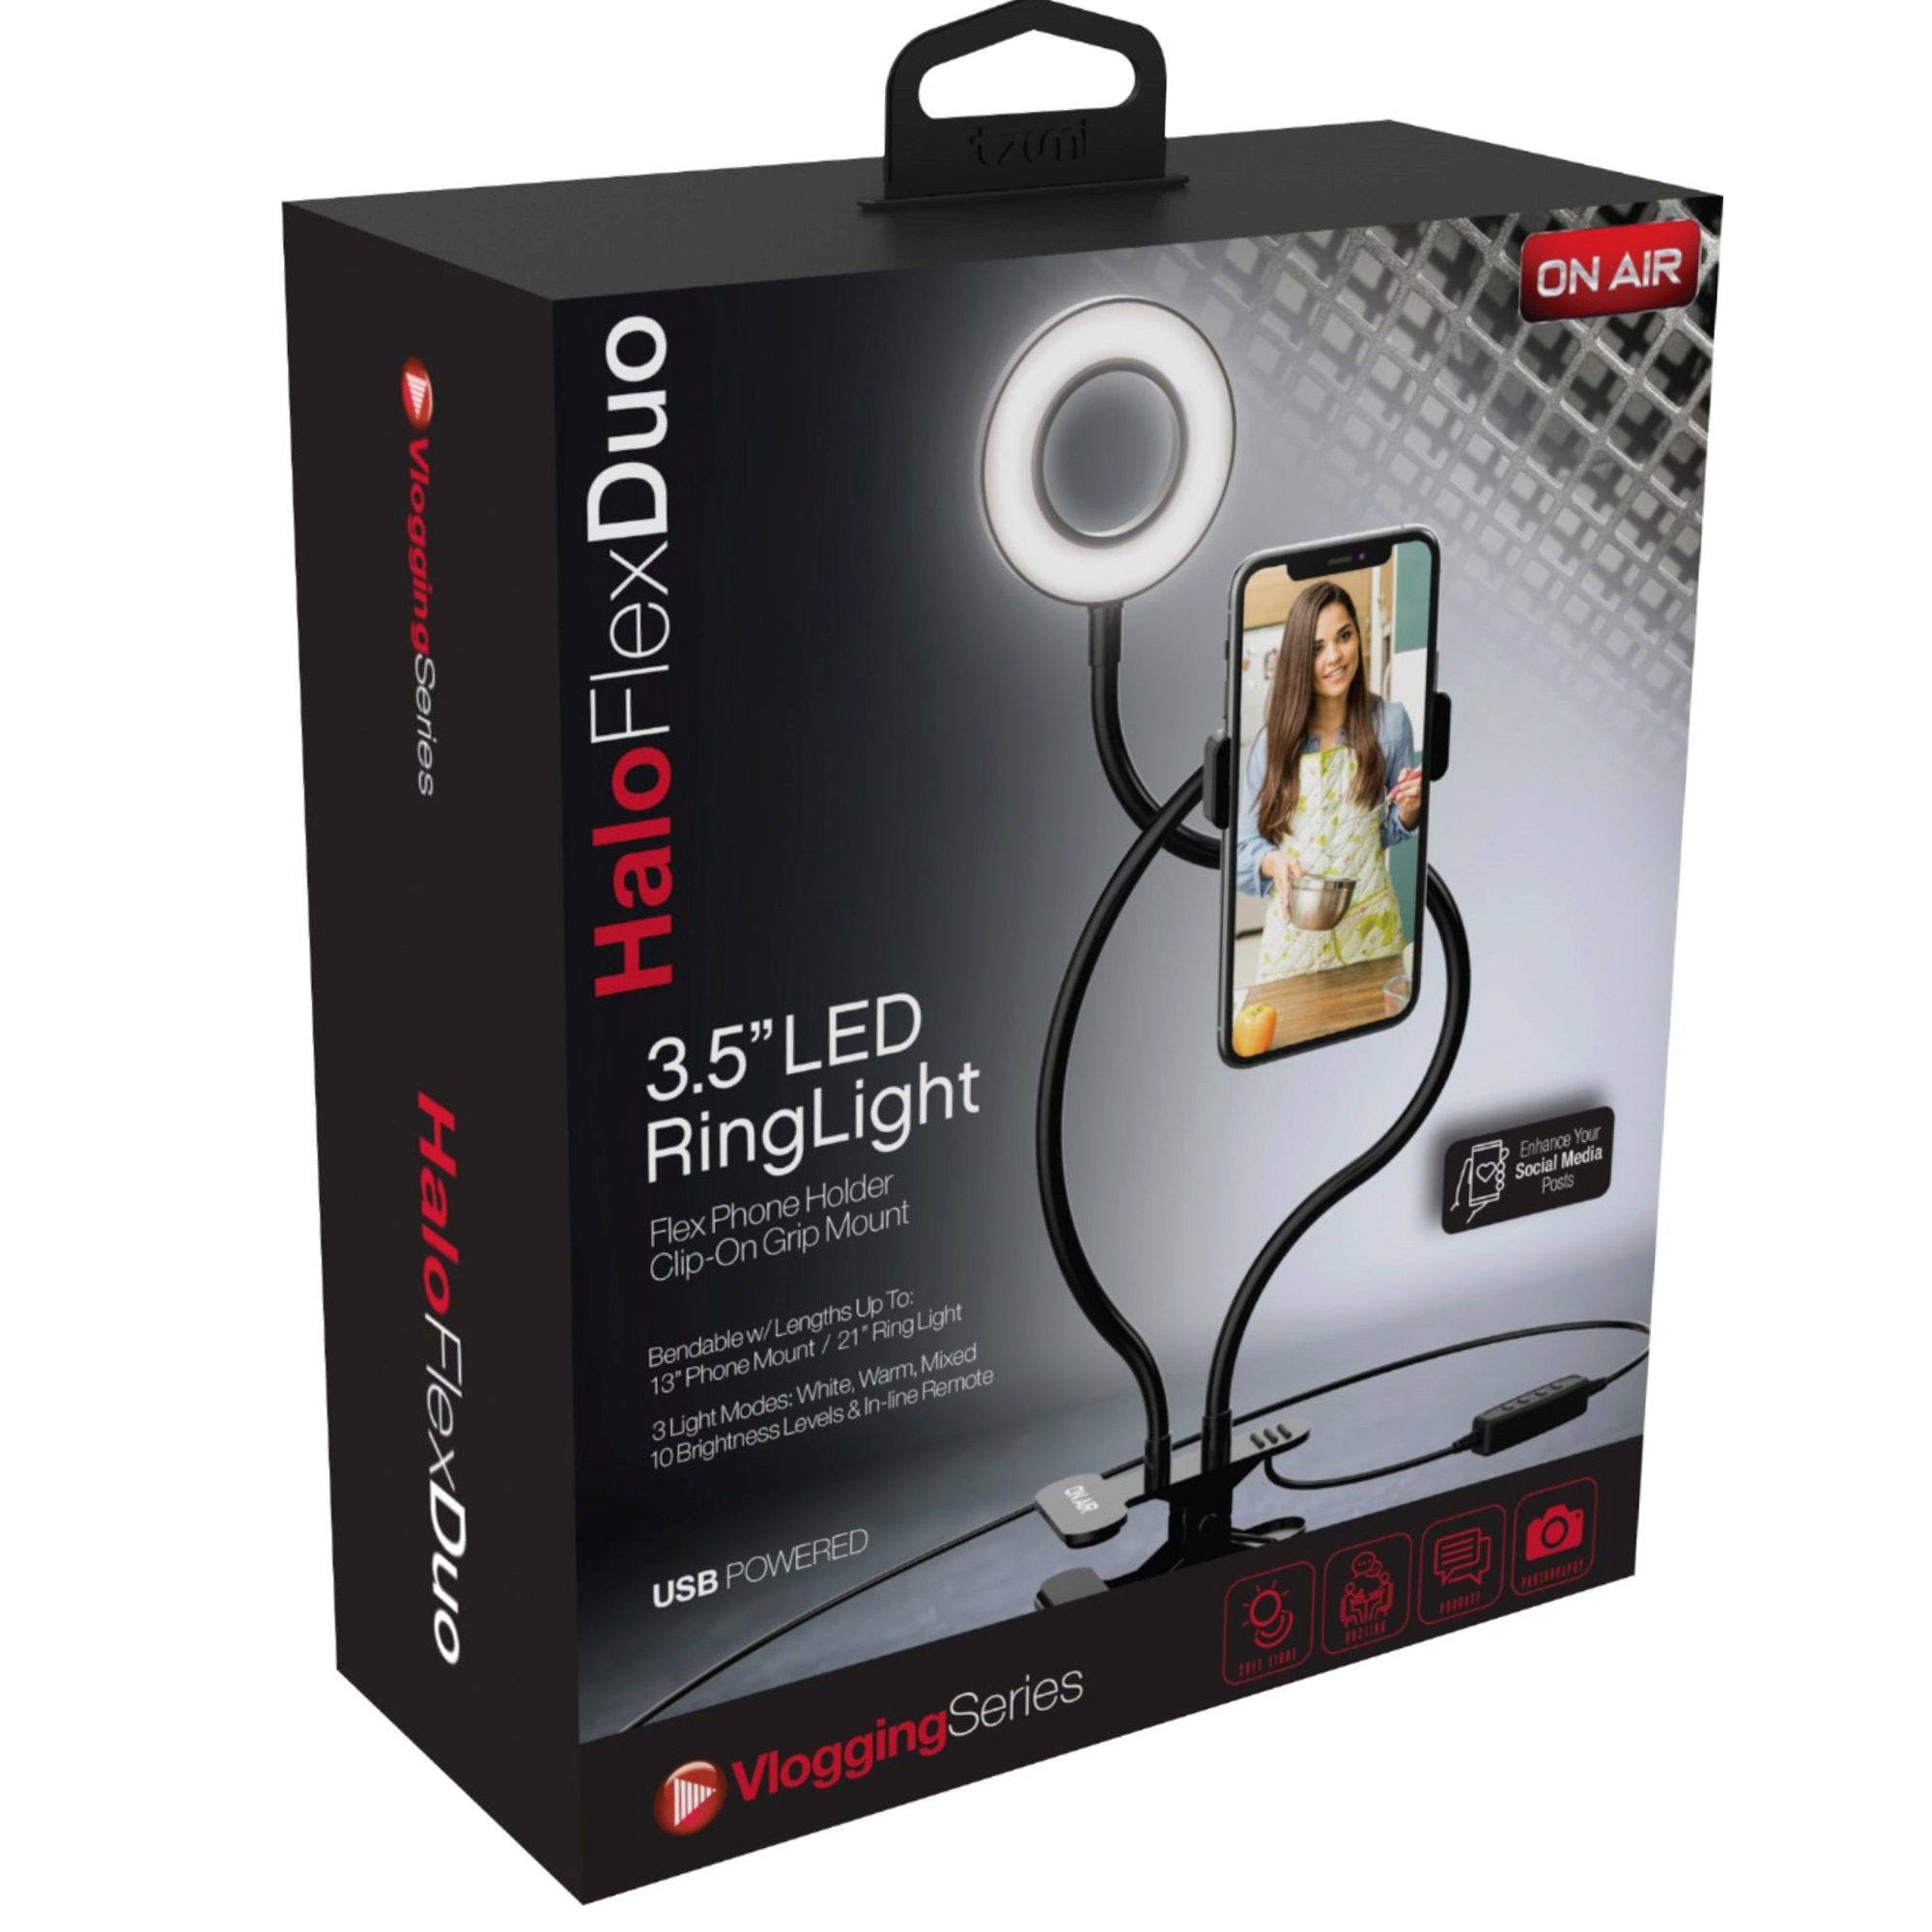 On Air Halo Flex Duo USB 3.5" LED Ring Light,